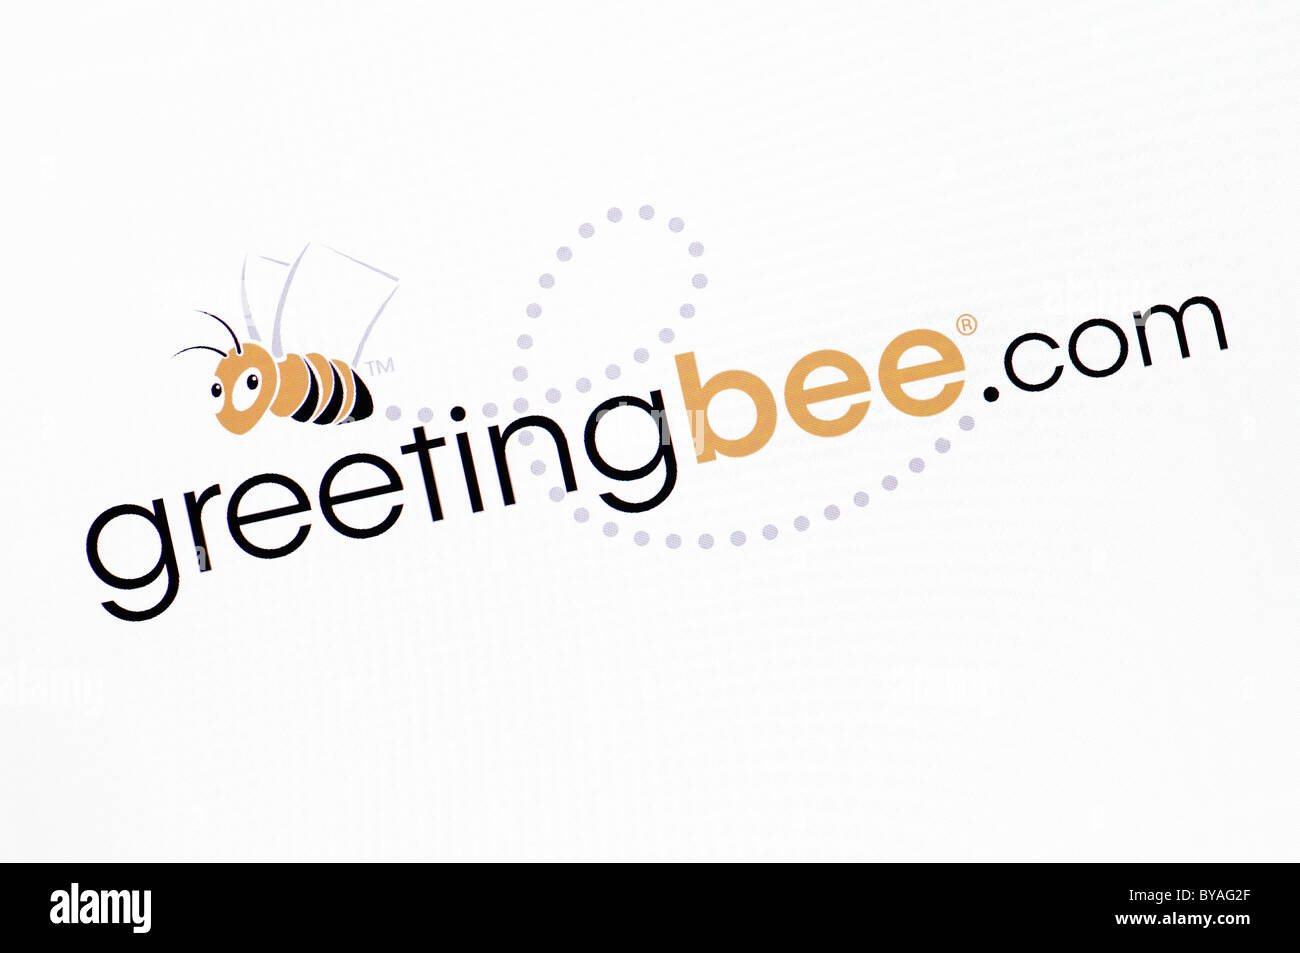 Greetingbee.com Website Screenshot Stock Photo